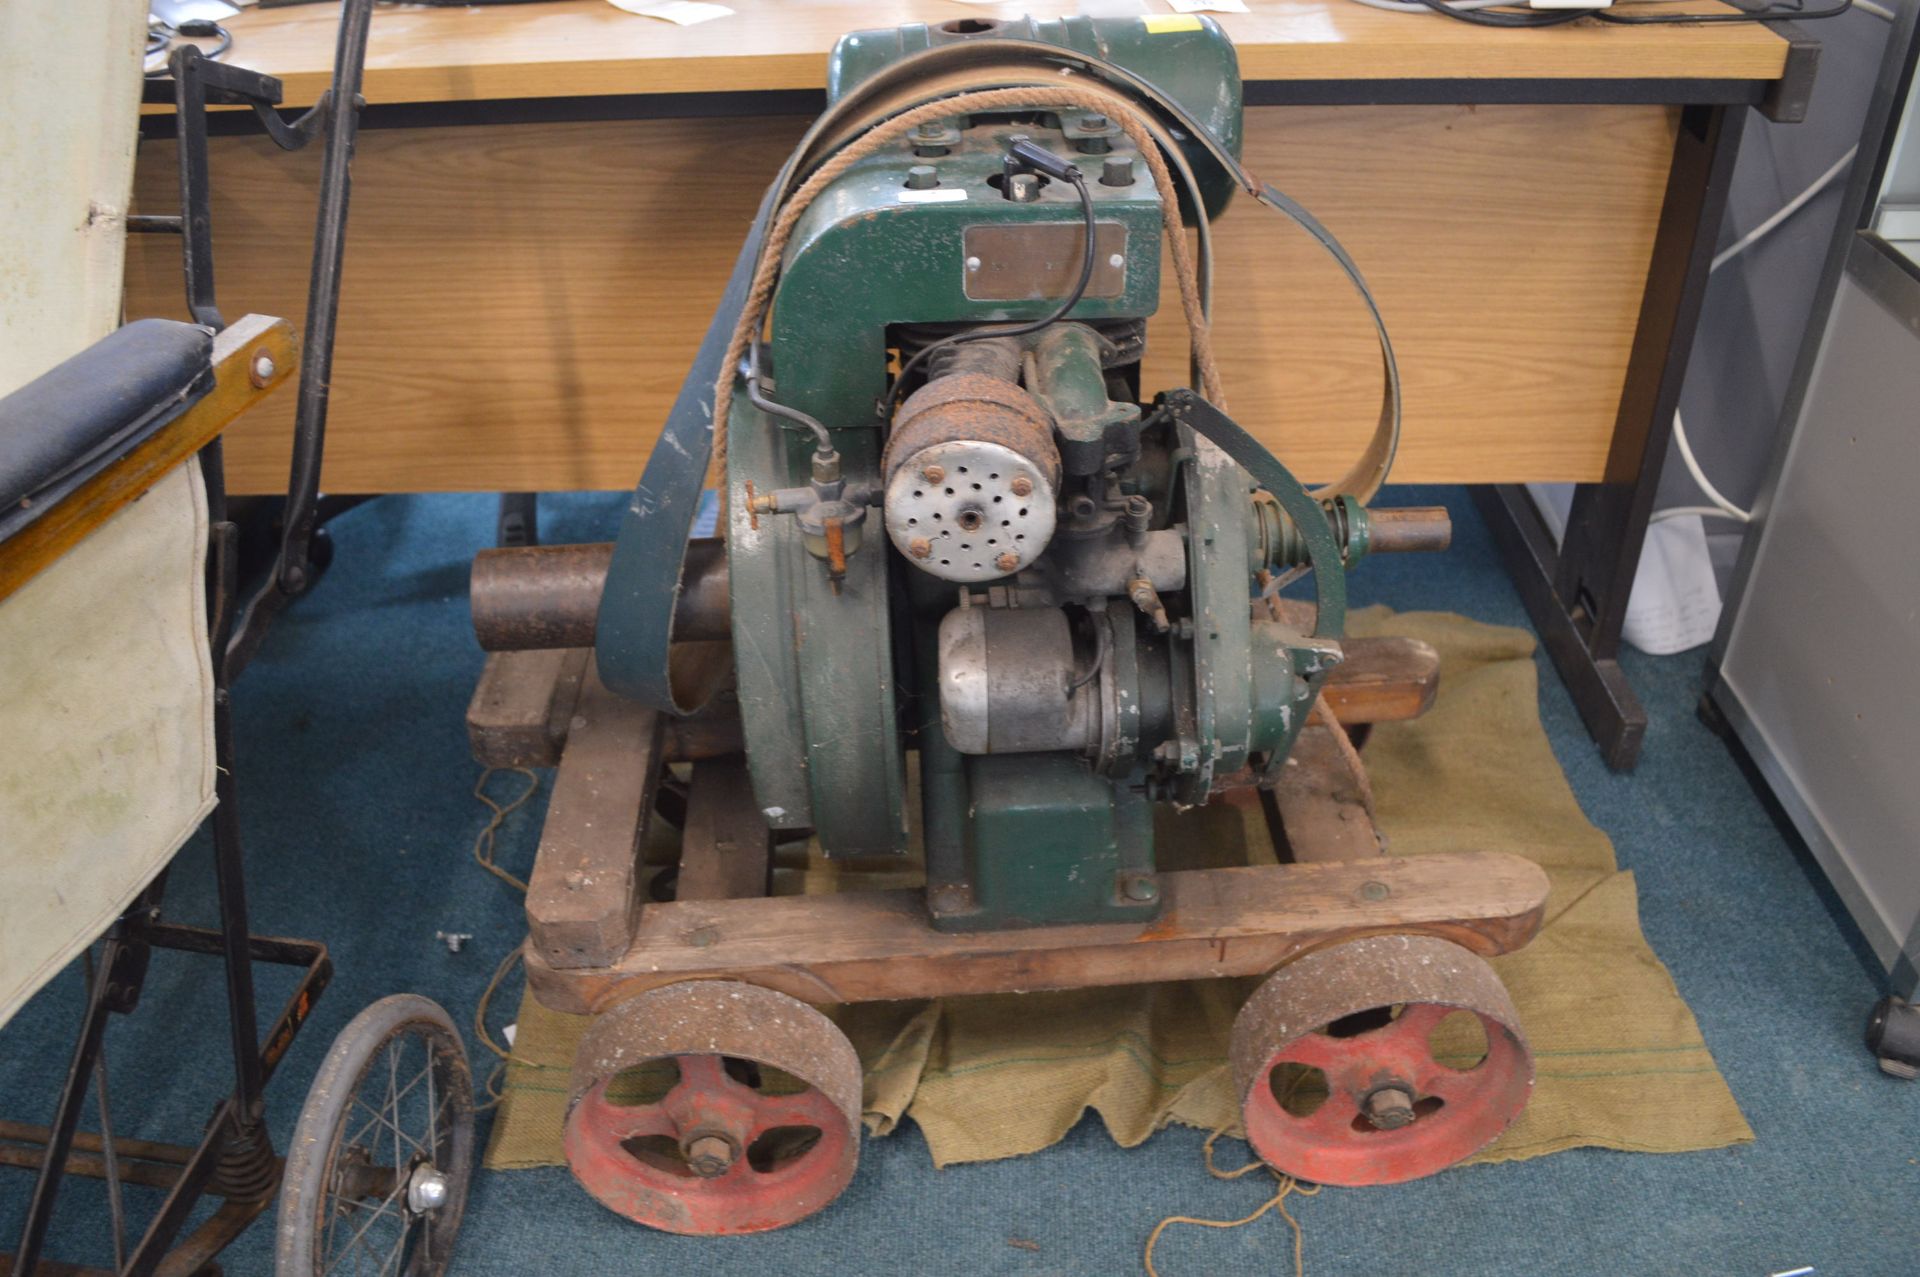 Petter Engine